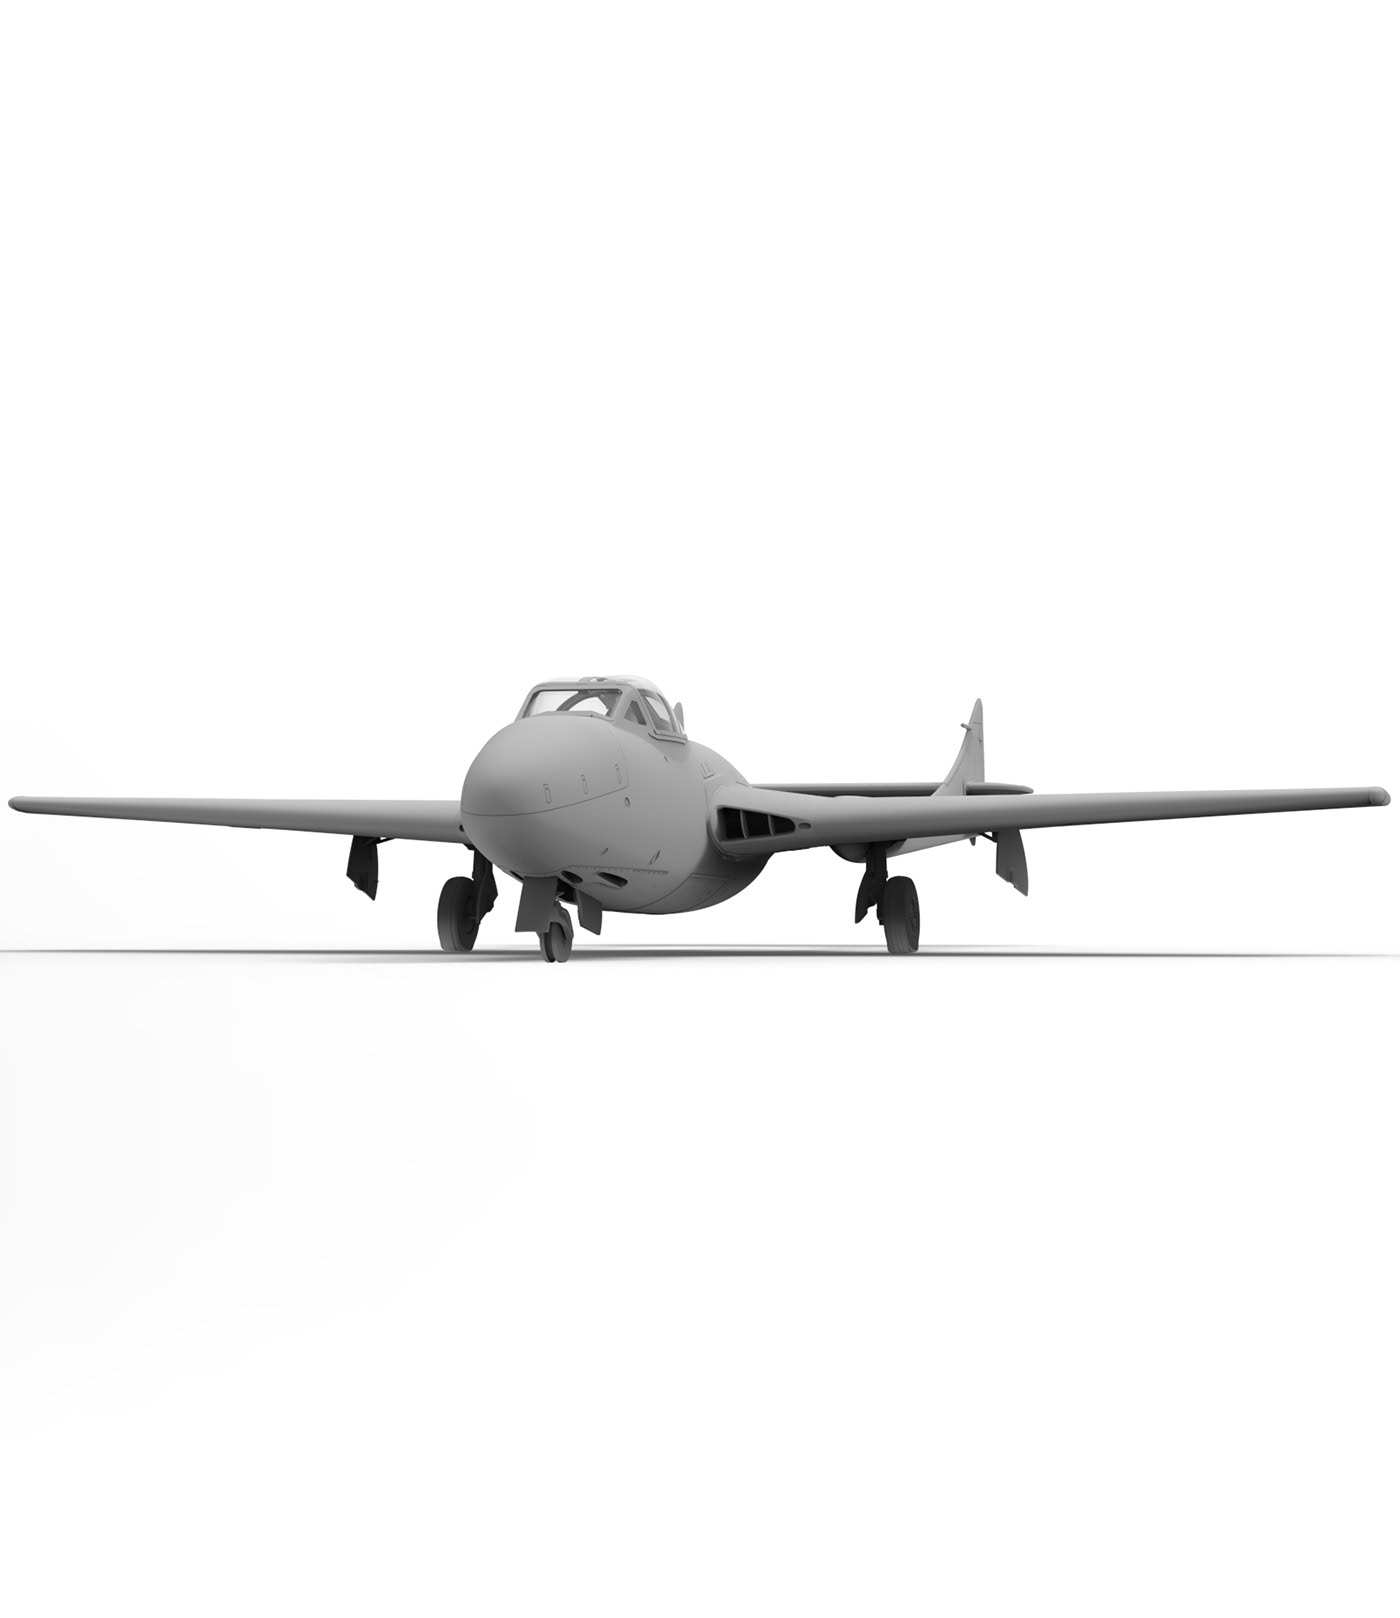 Aeromodelismo avión a escala coleccionistas Hobby modelismo plane realismo replicas war plane